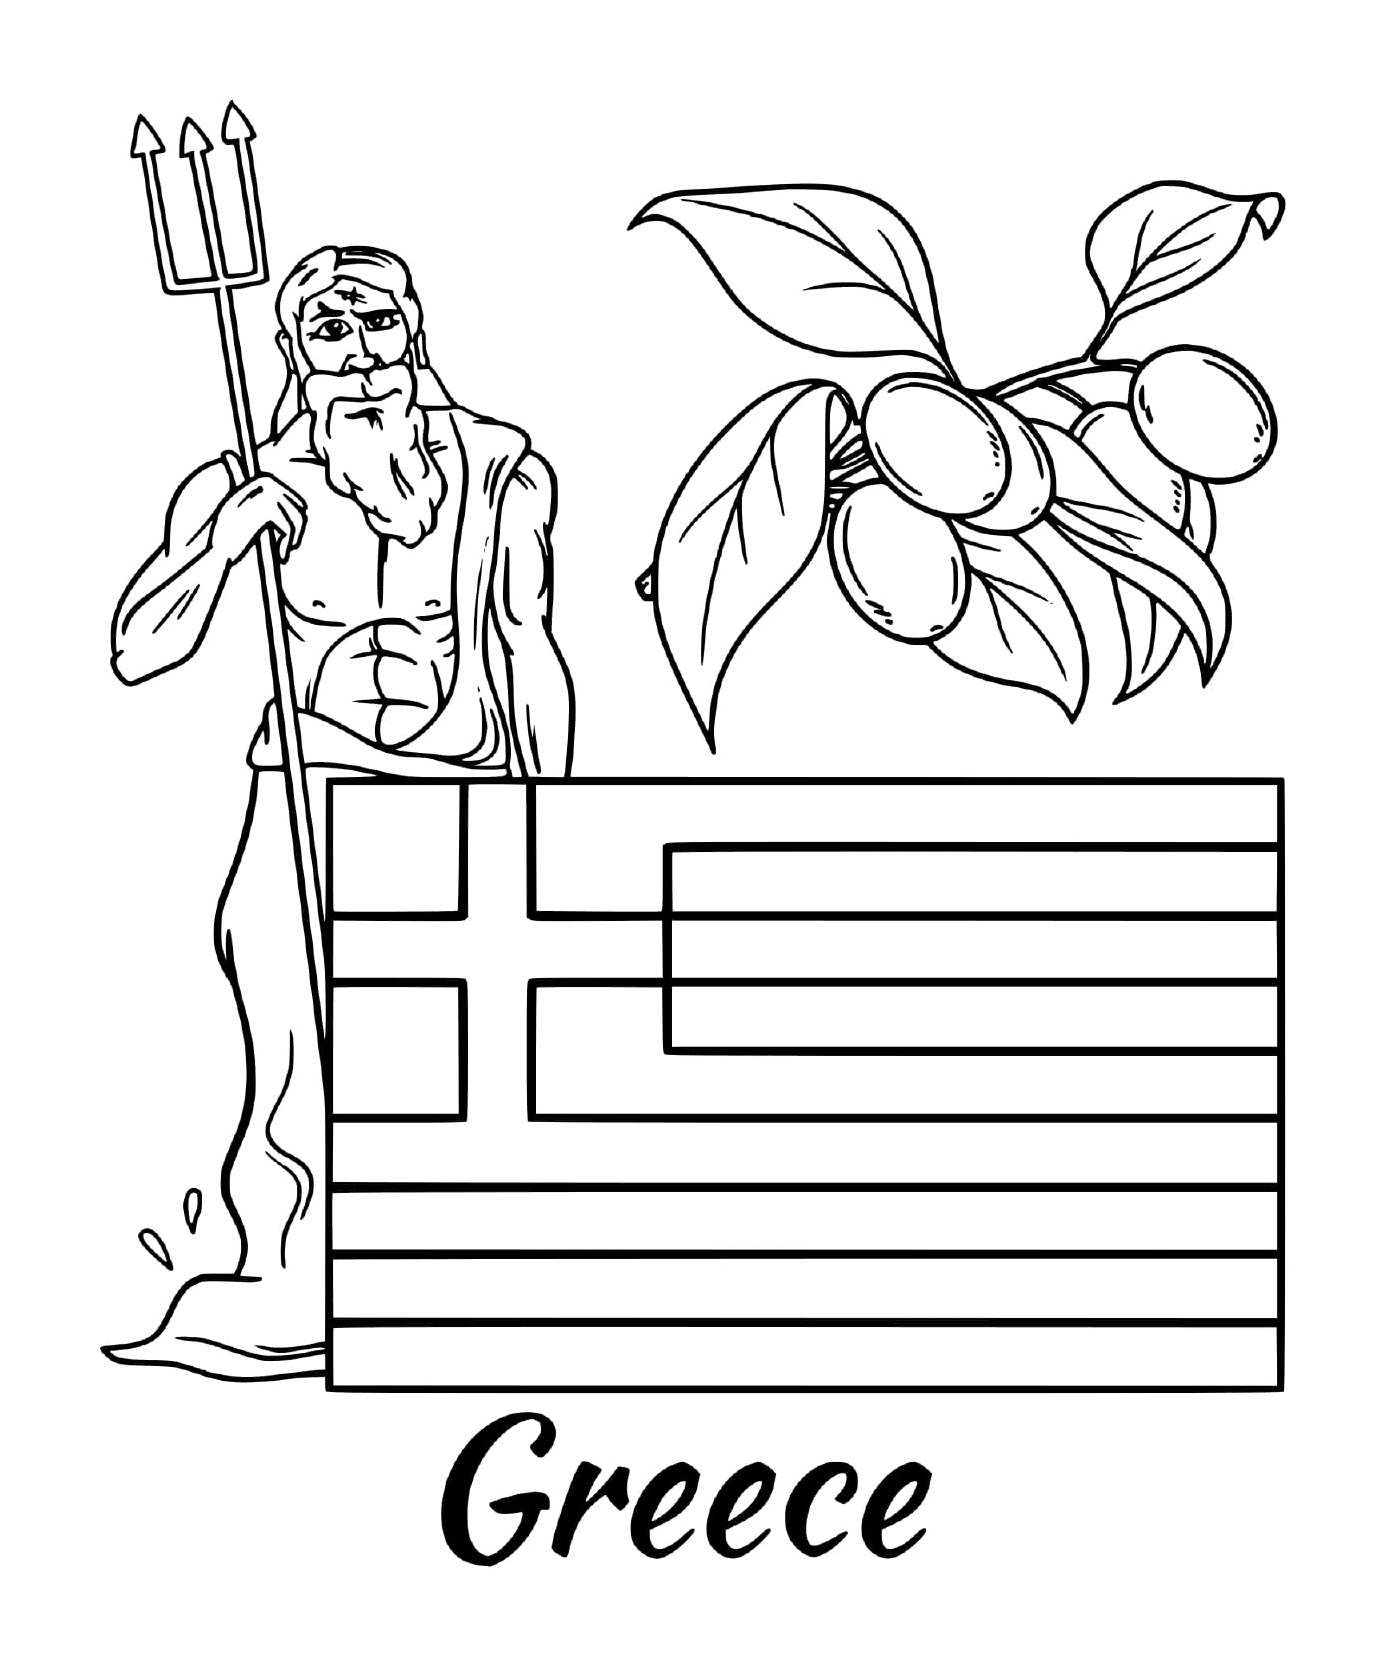  Flag of Greece with Zeus 